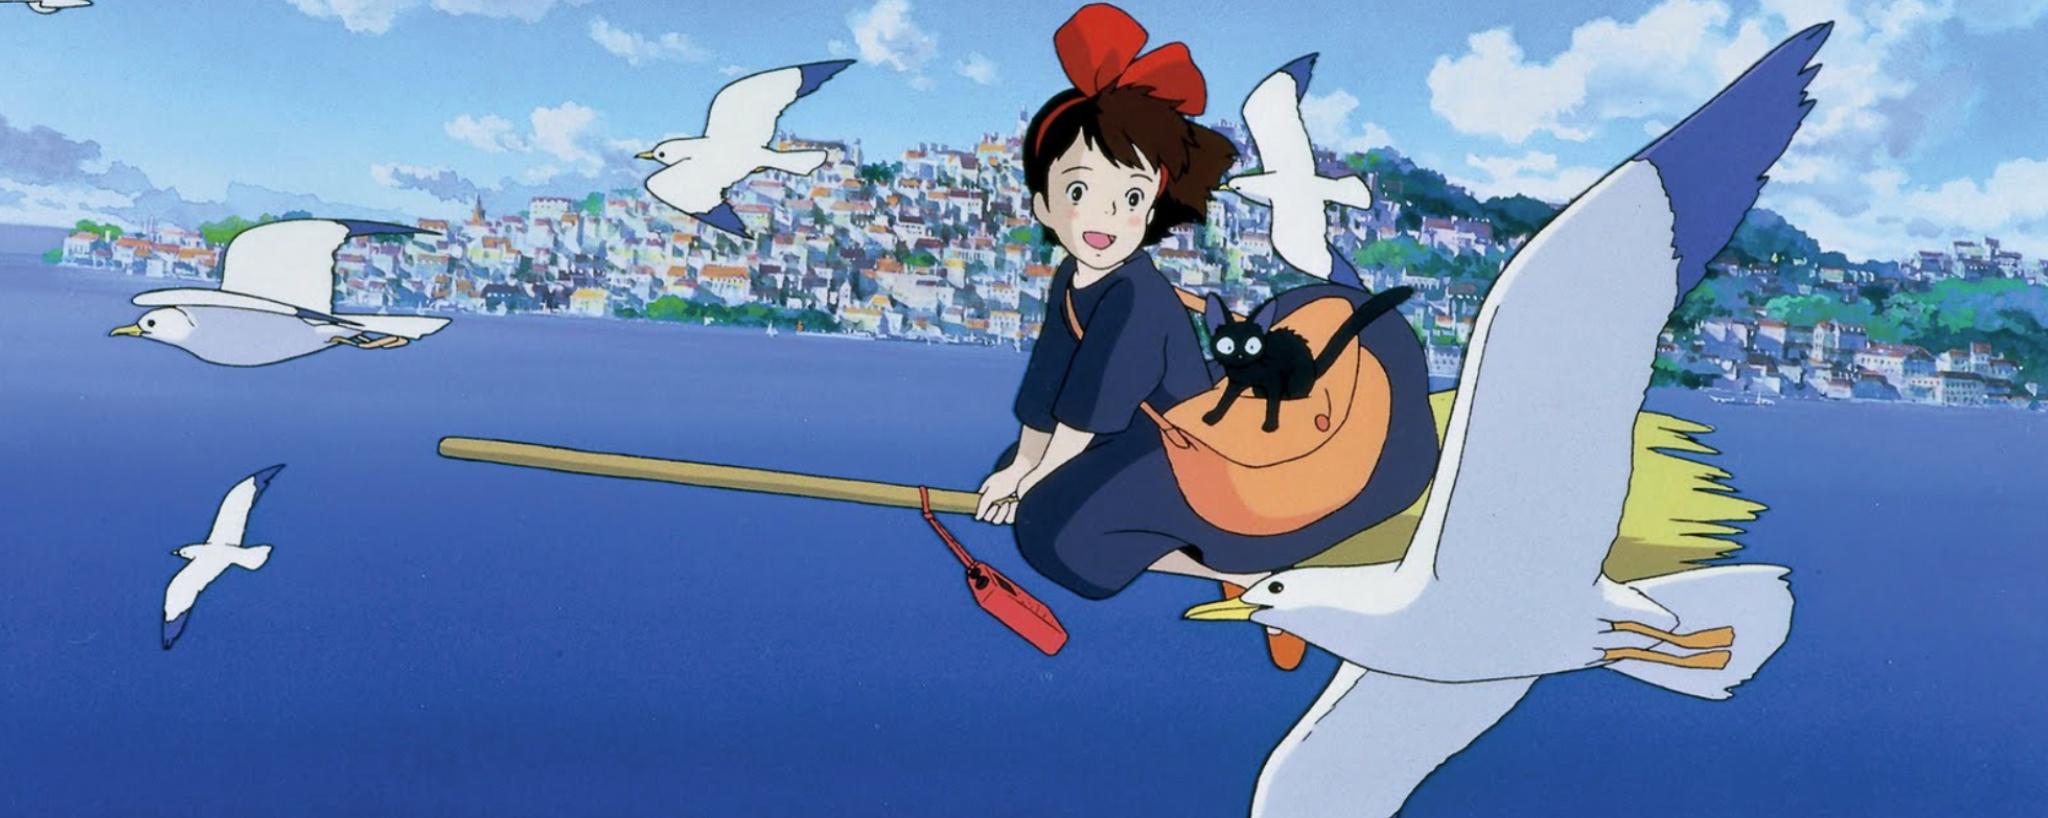 Kiki and Jiji flying on her broomstick